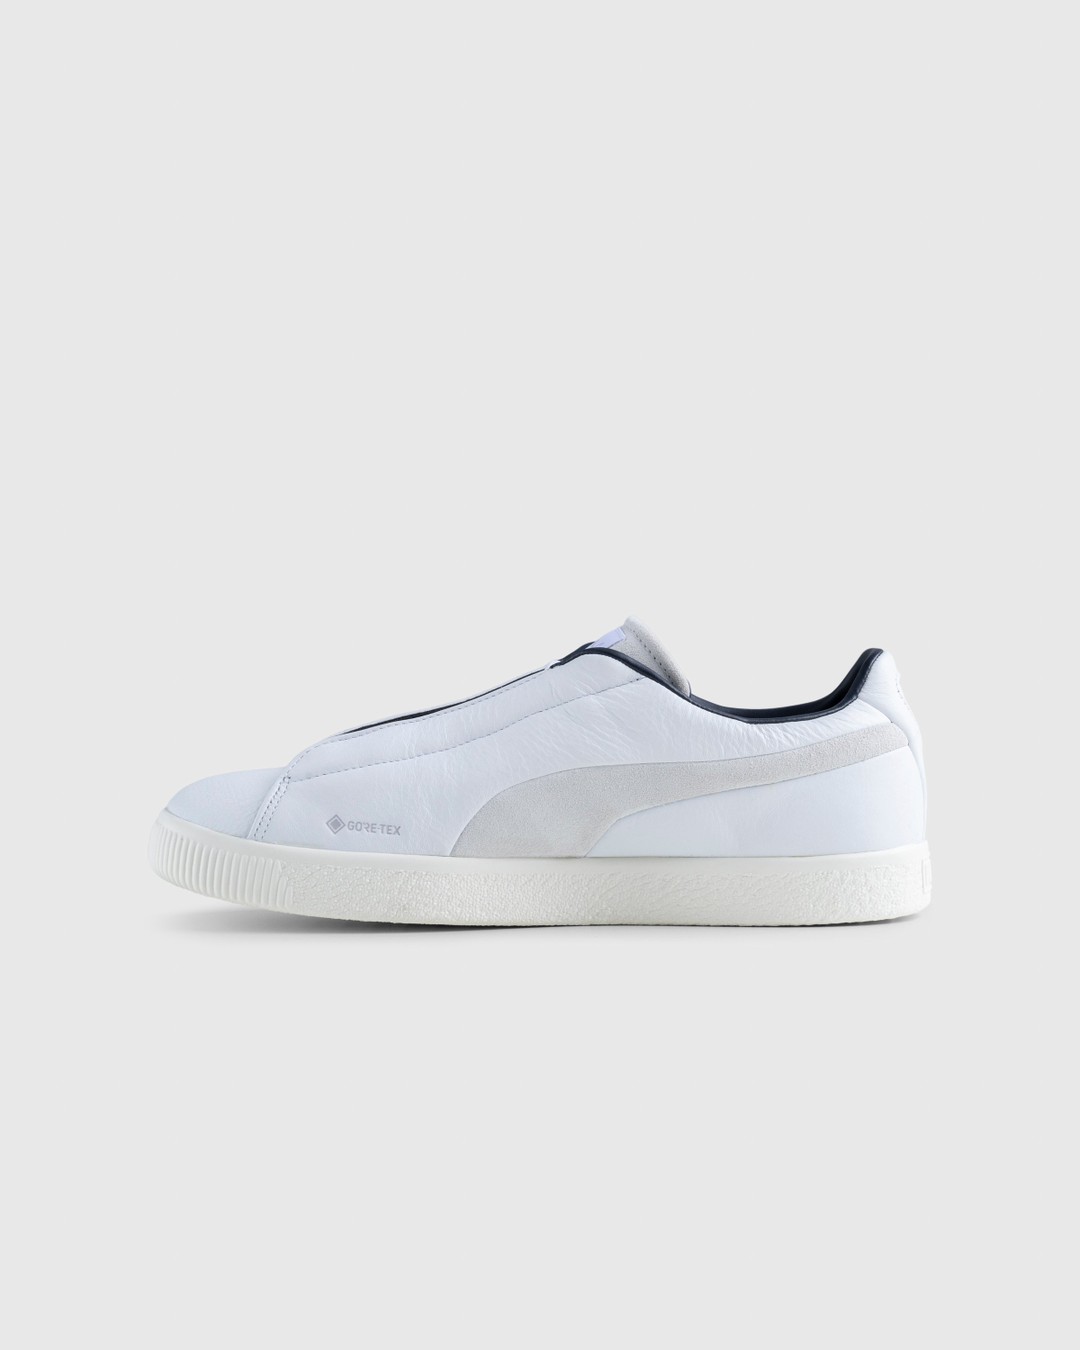 Puma x Nanamica – Clyde GORE-TEX White - Sneakers - White - Image 2